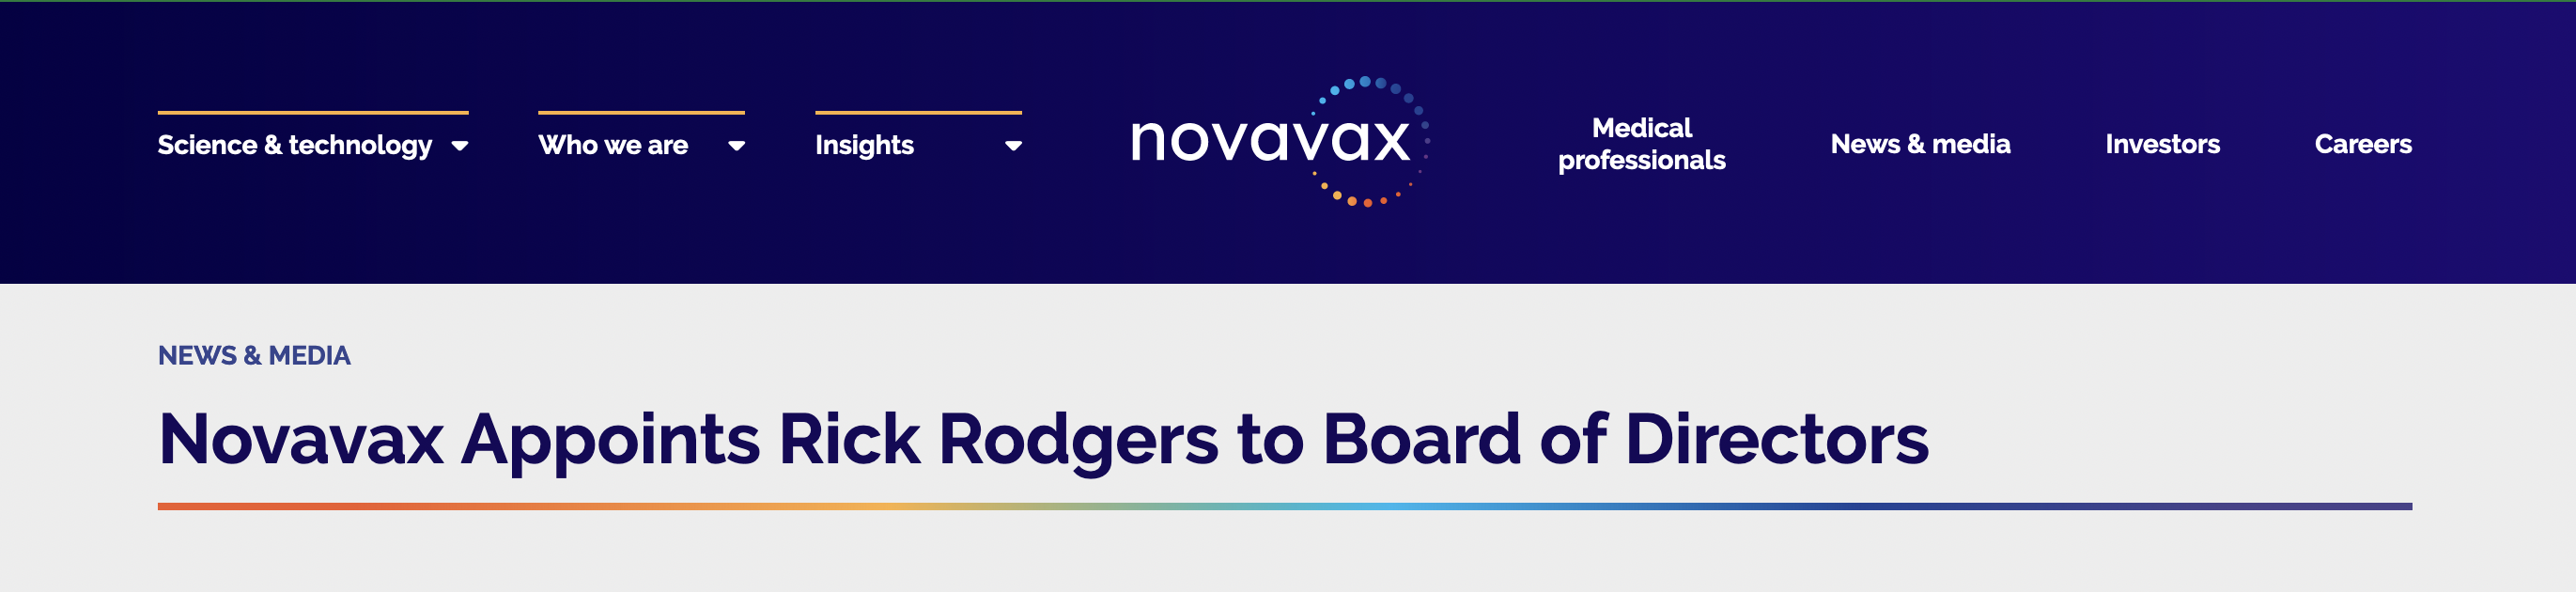 Richard Rodgers im Novavax-Vorstand